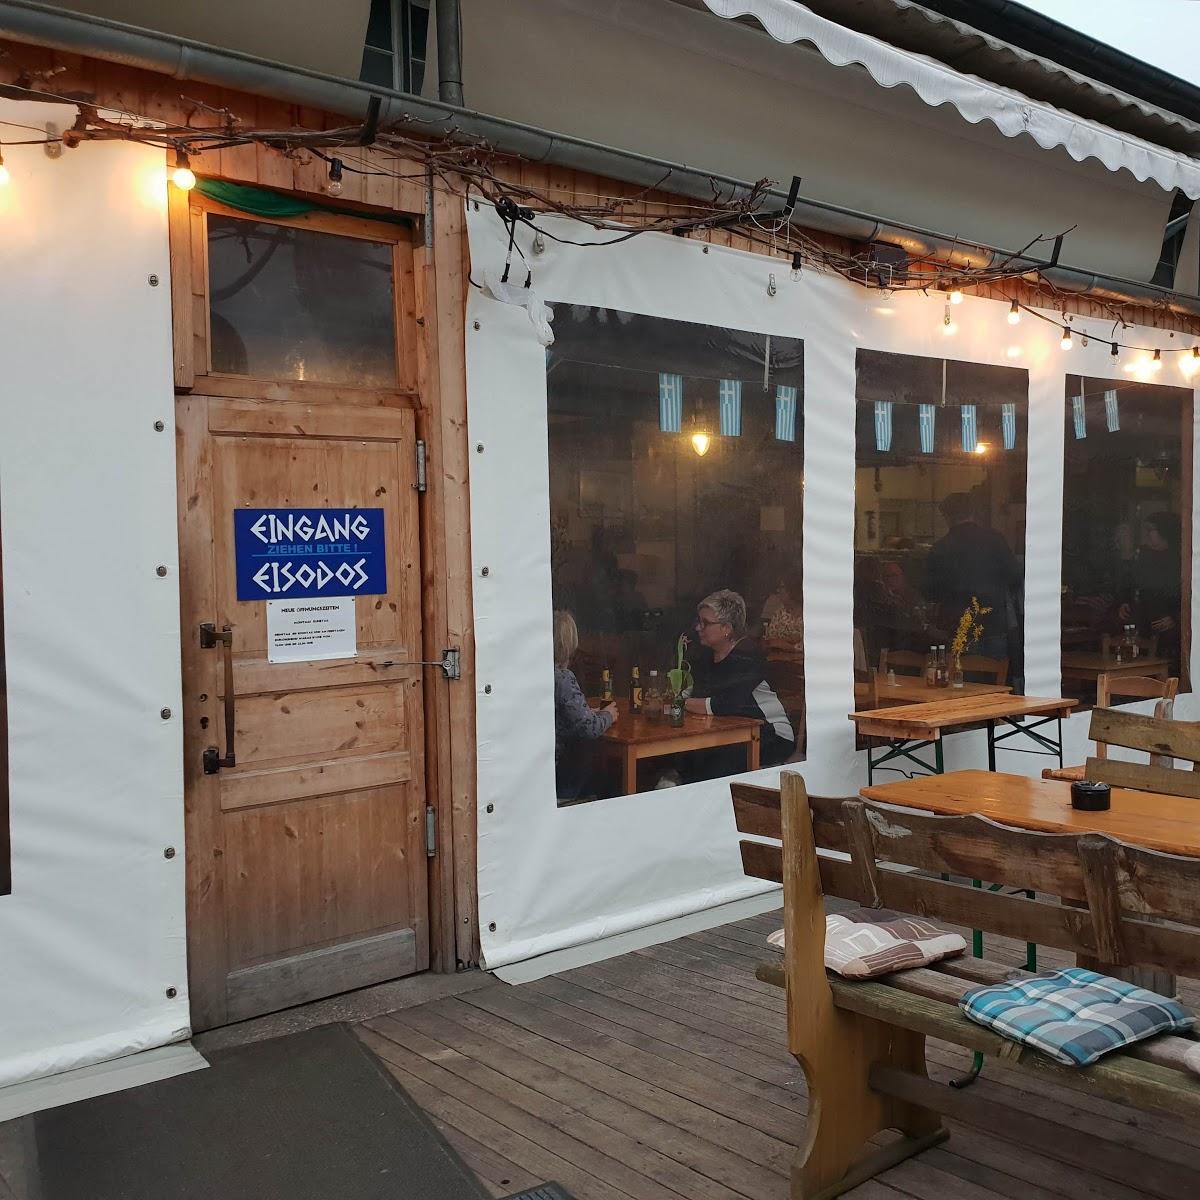 Restaurant "Grieche Taverne" in Krefeld